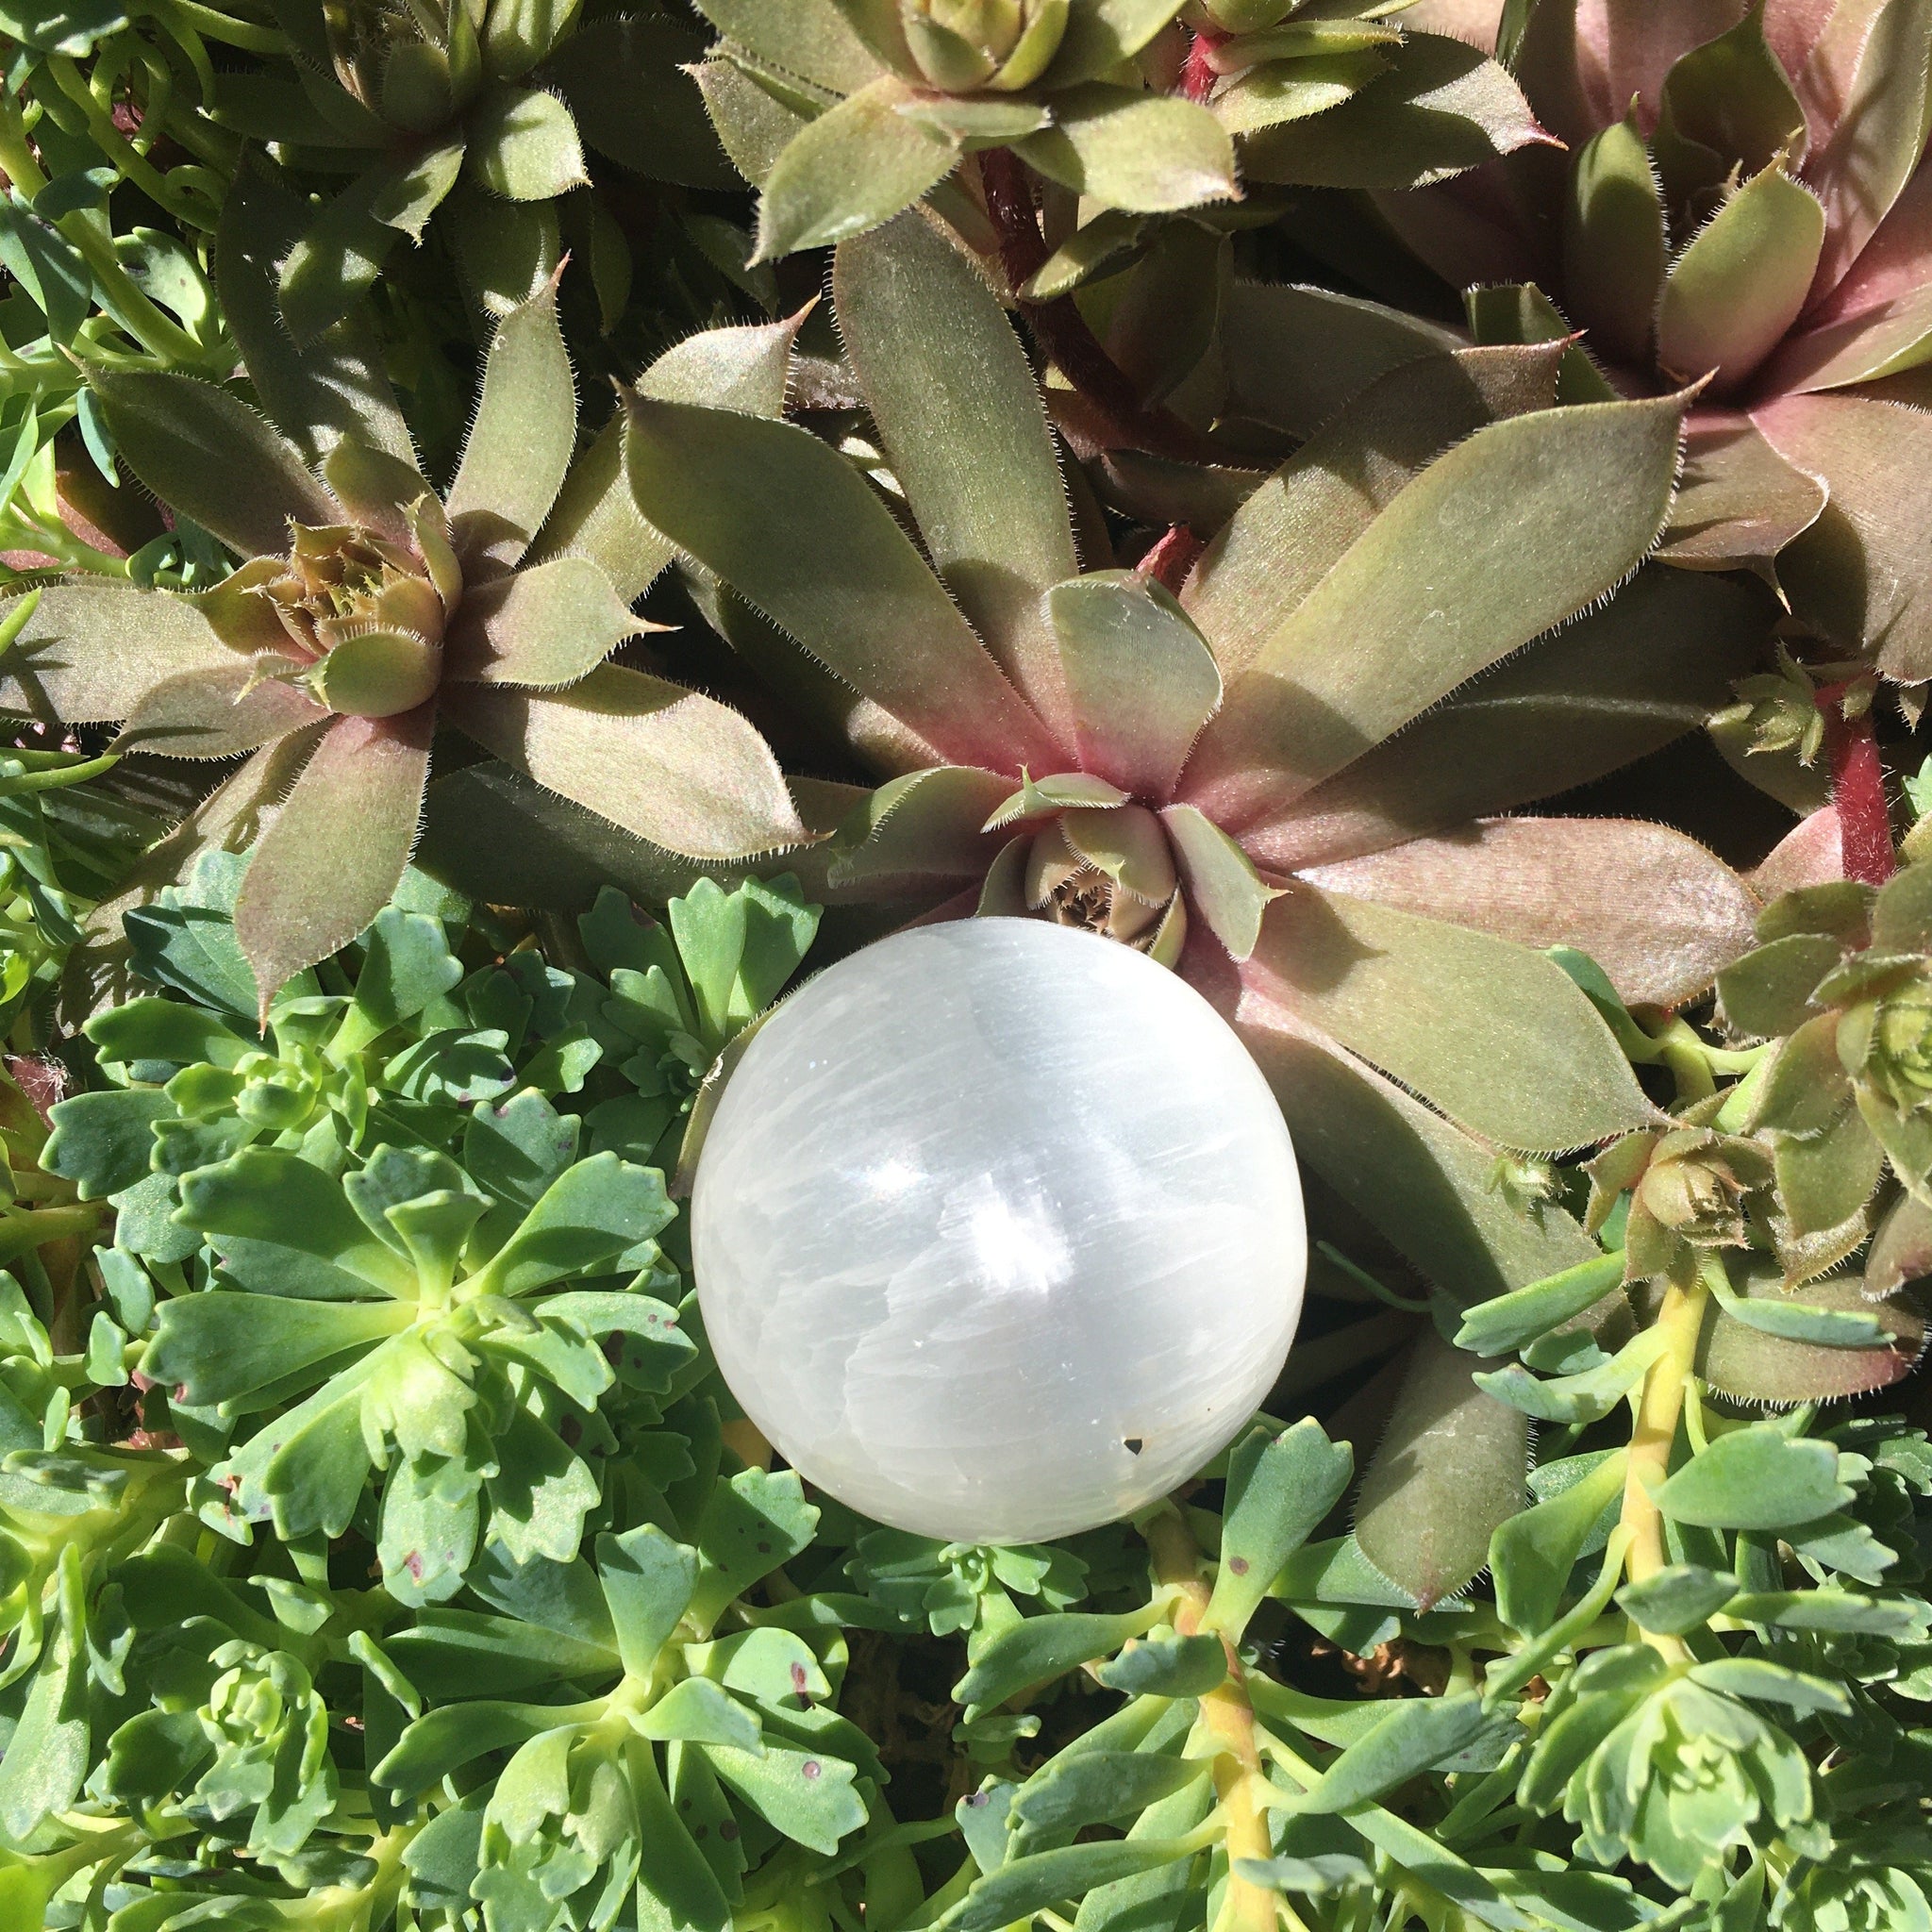 Selenite Sphere - Medium